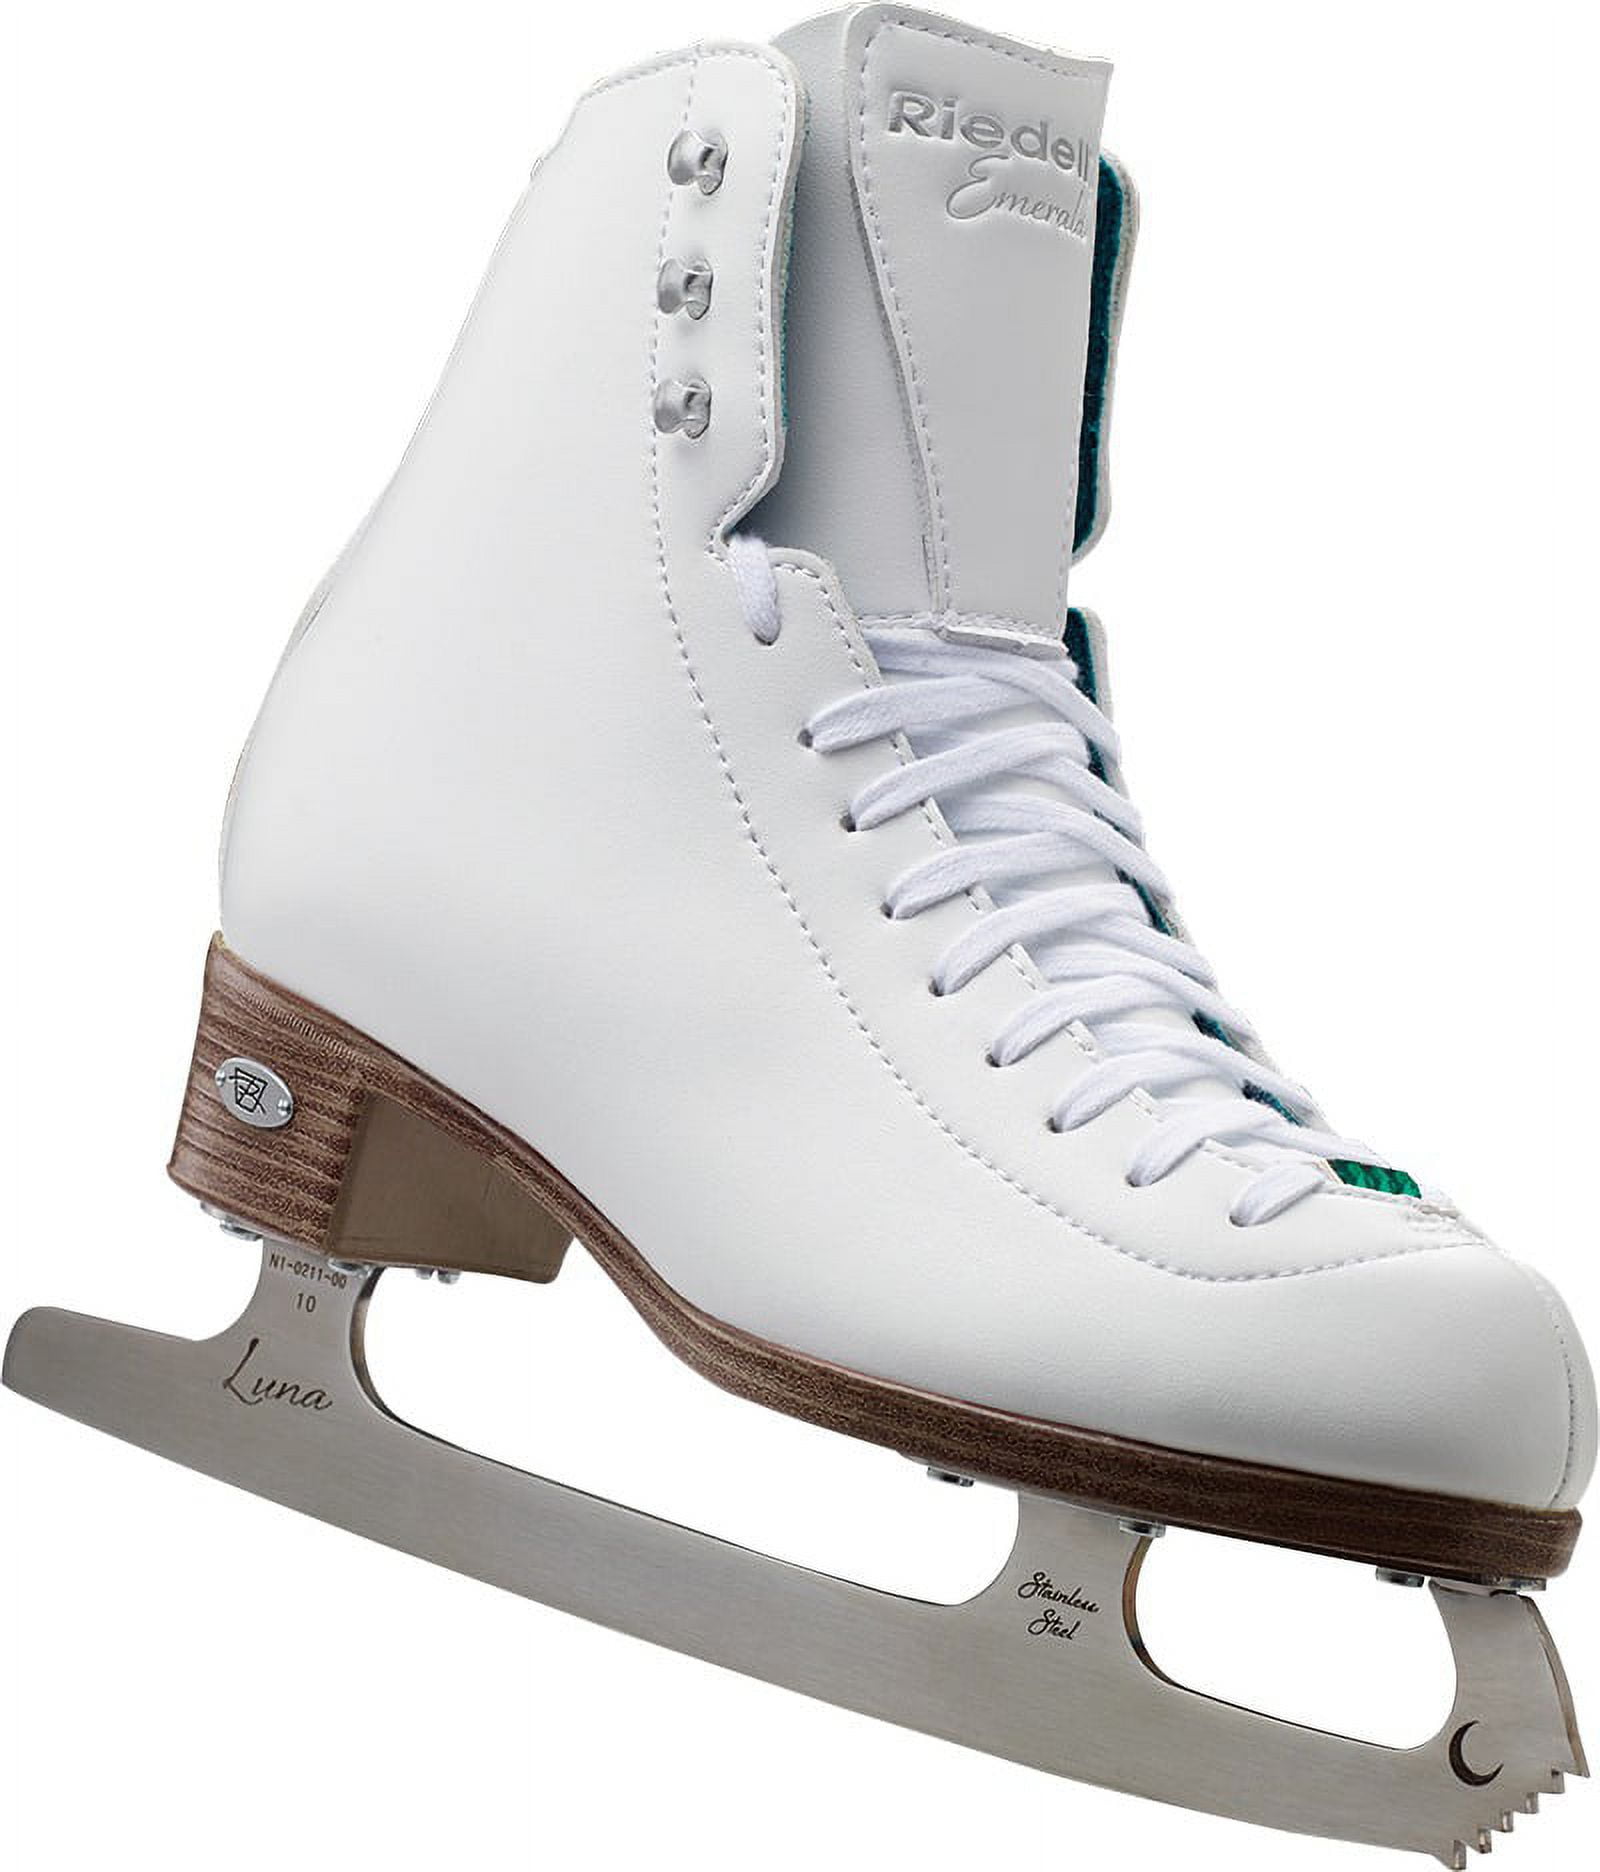 Danielson Standard Polar Creel, 14 x 9, Figure Skates 